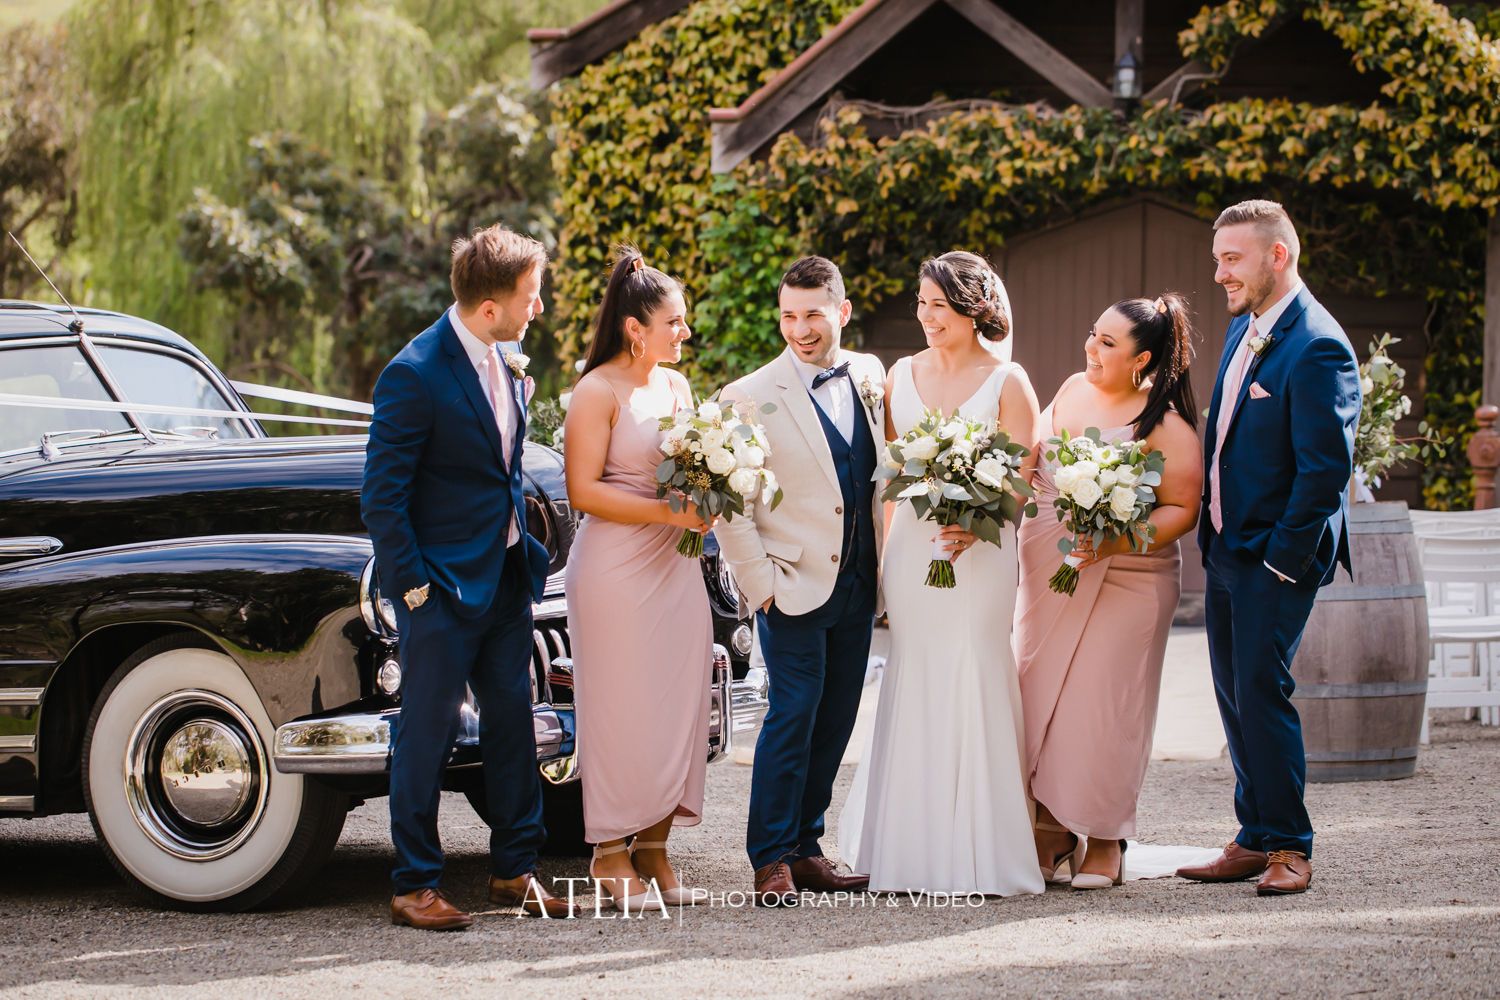 , Inglewood Estate Yarra Valley Wedding Photography by ATEIA